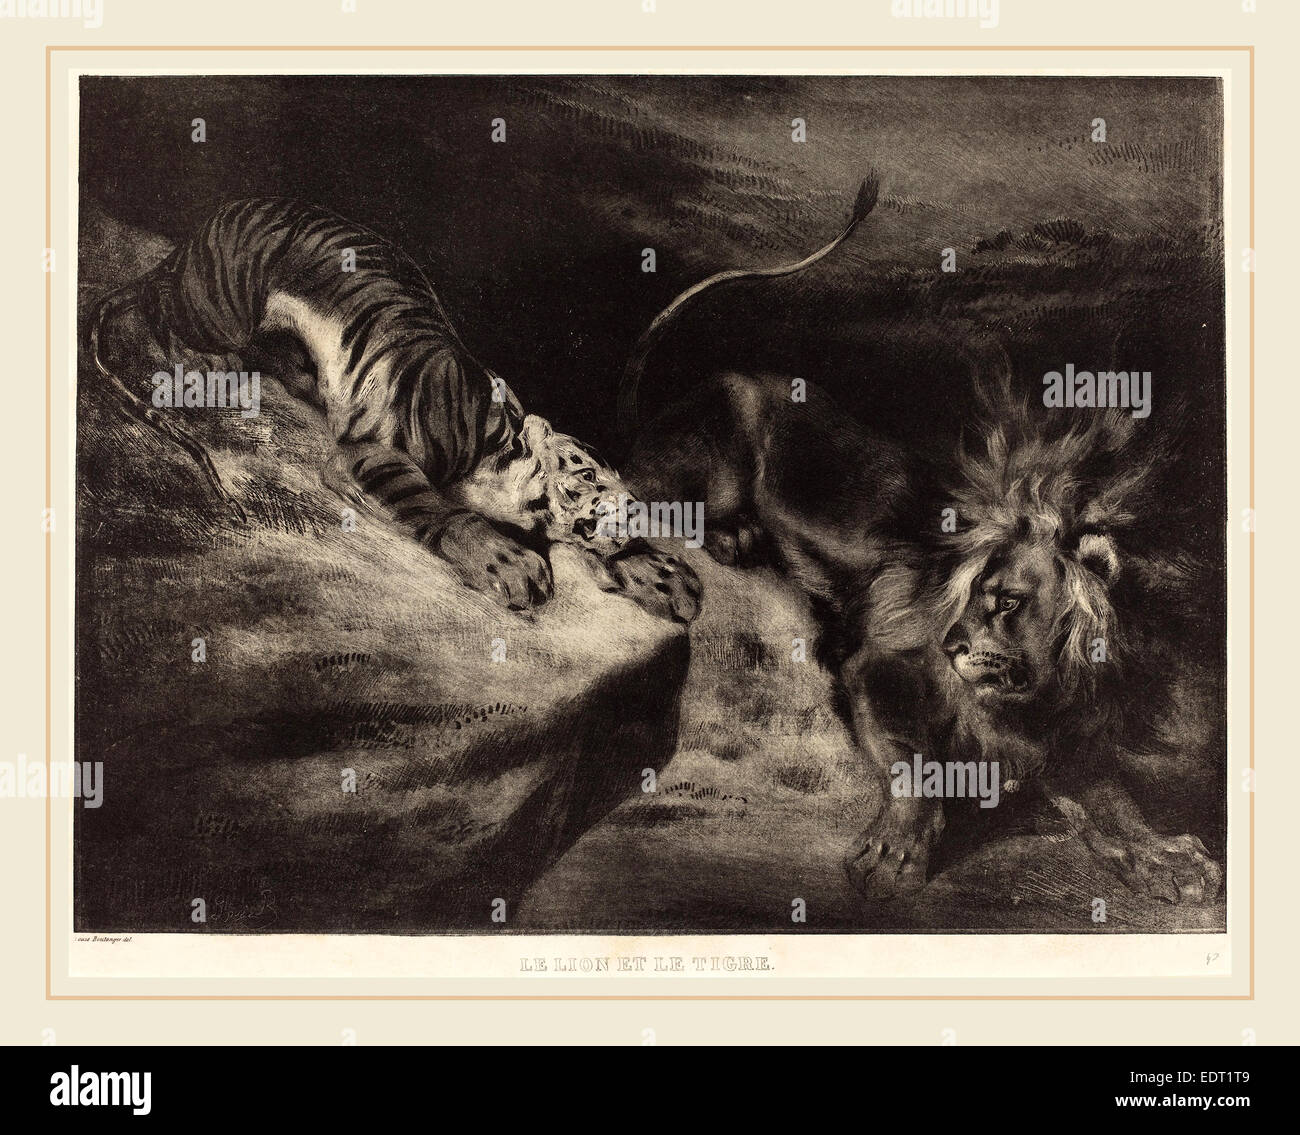 Le tigre -Fotos und -Bildmaterial in hoher Auflösung – Alamy